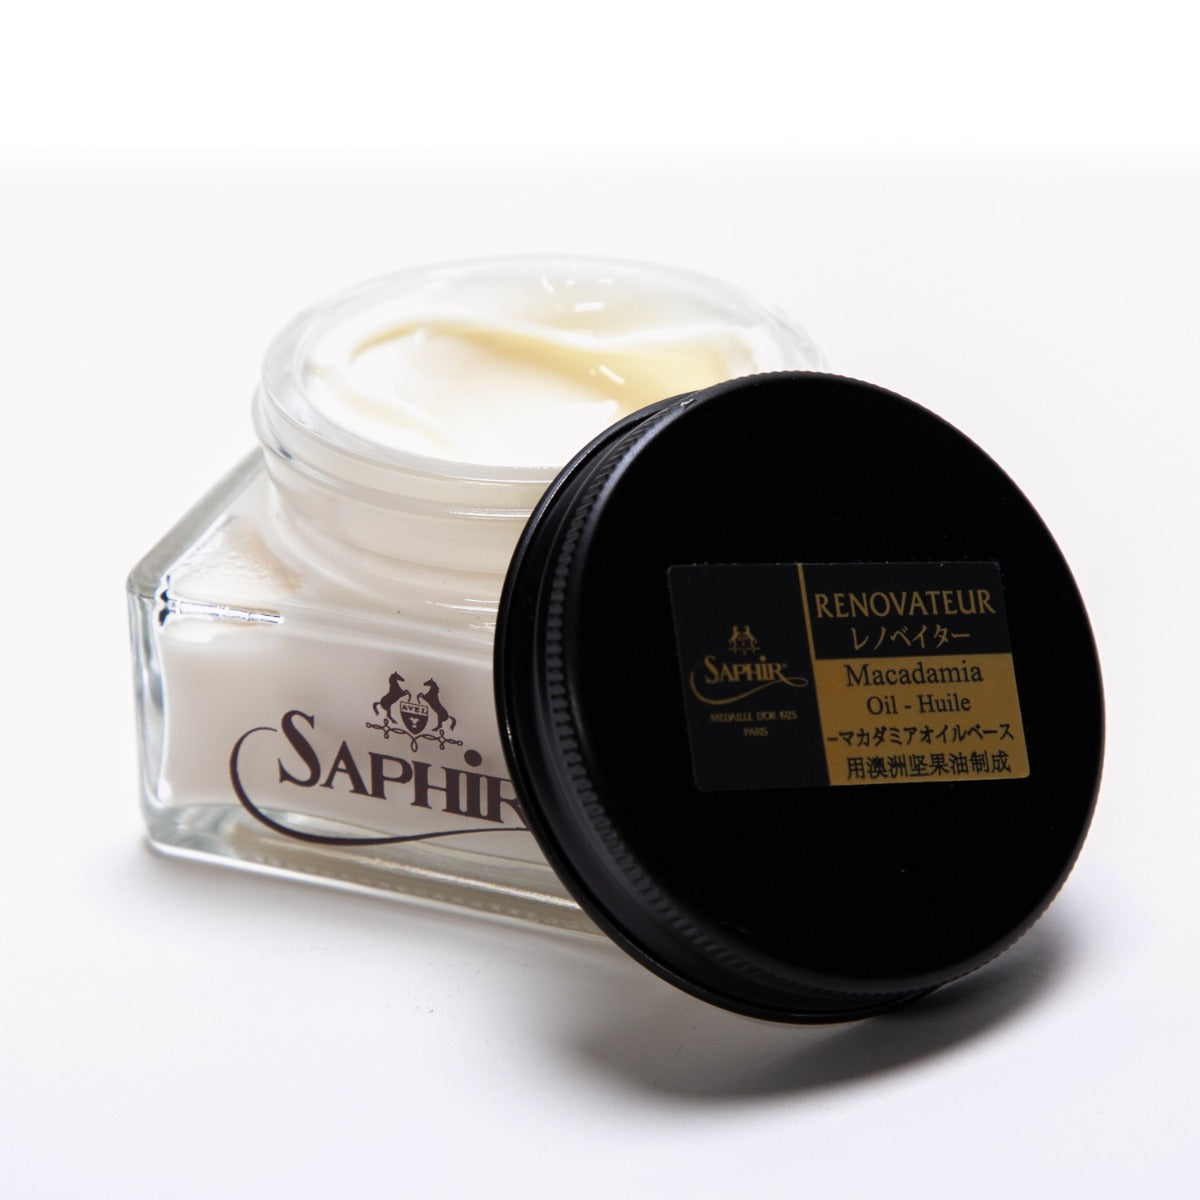 Saphir Renovateur w/ Macadamia Oil